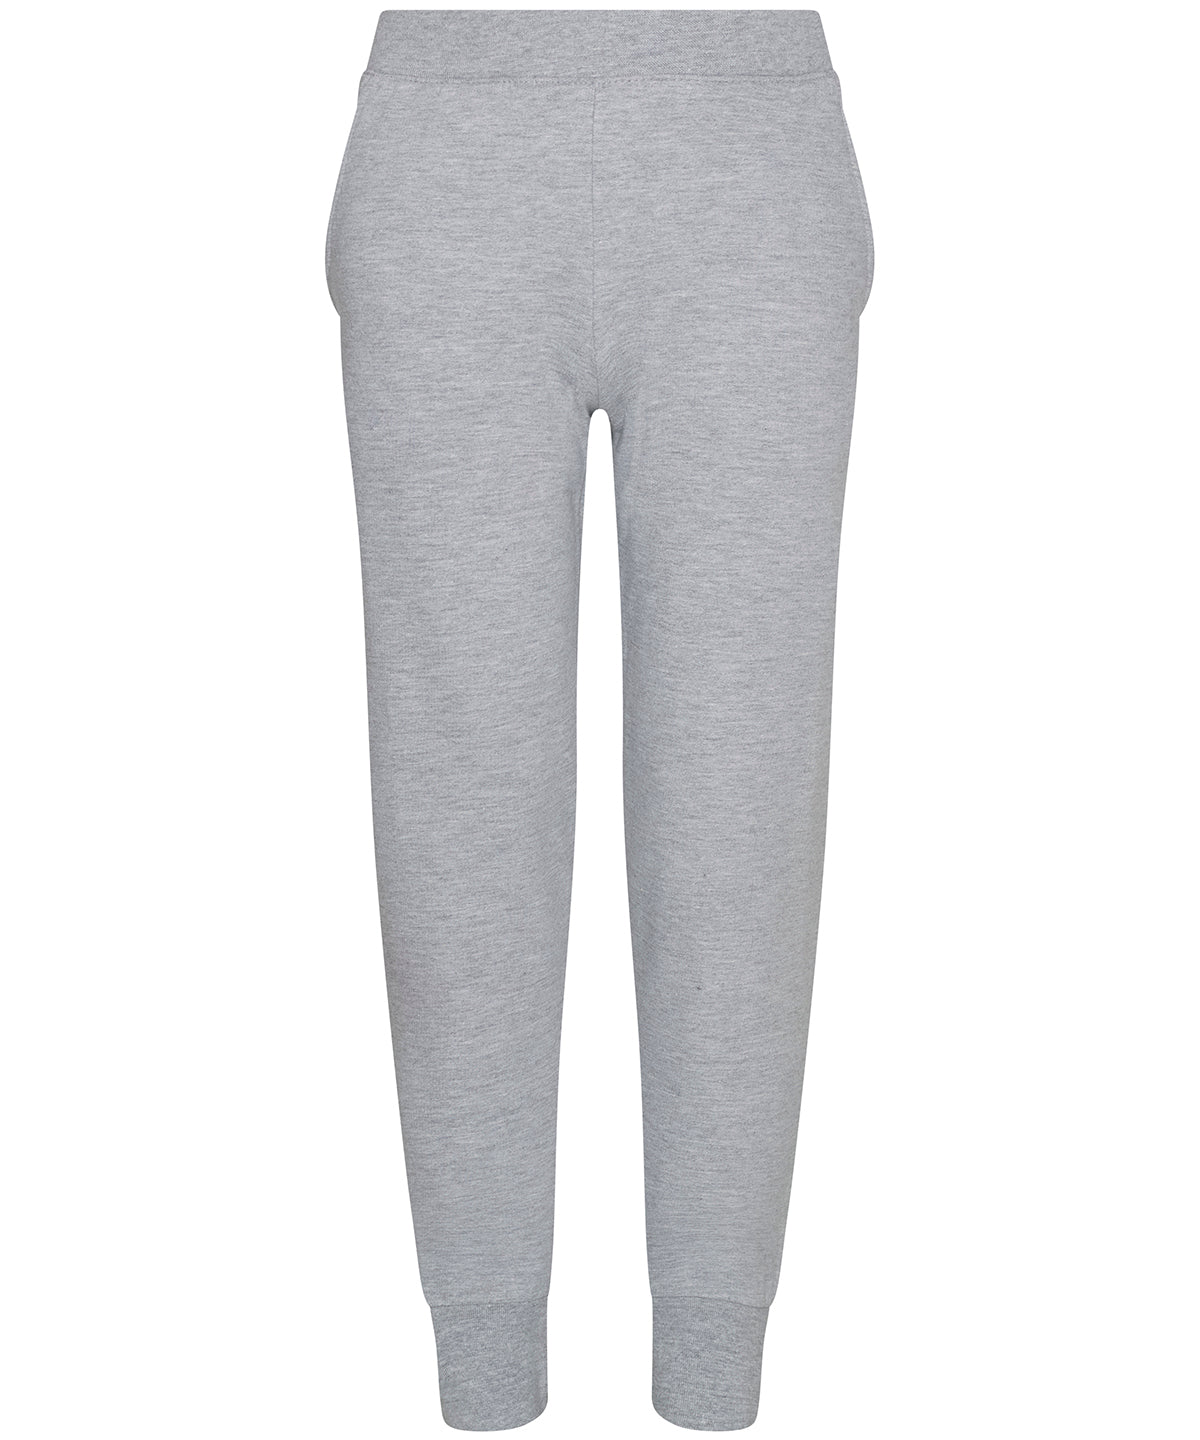 Personalised Sweatpants - Heather Grey AWDis Just Hoods Kids tapered track pants